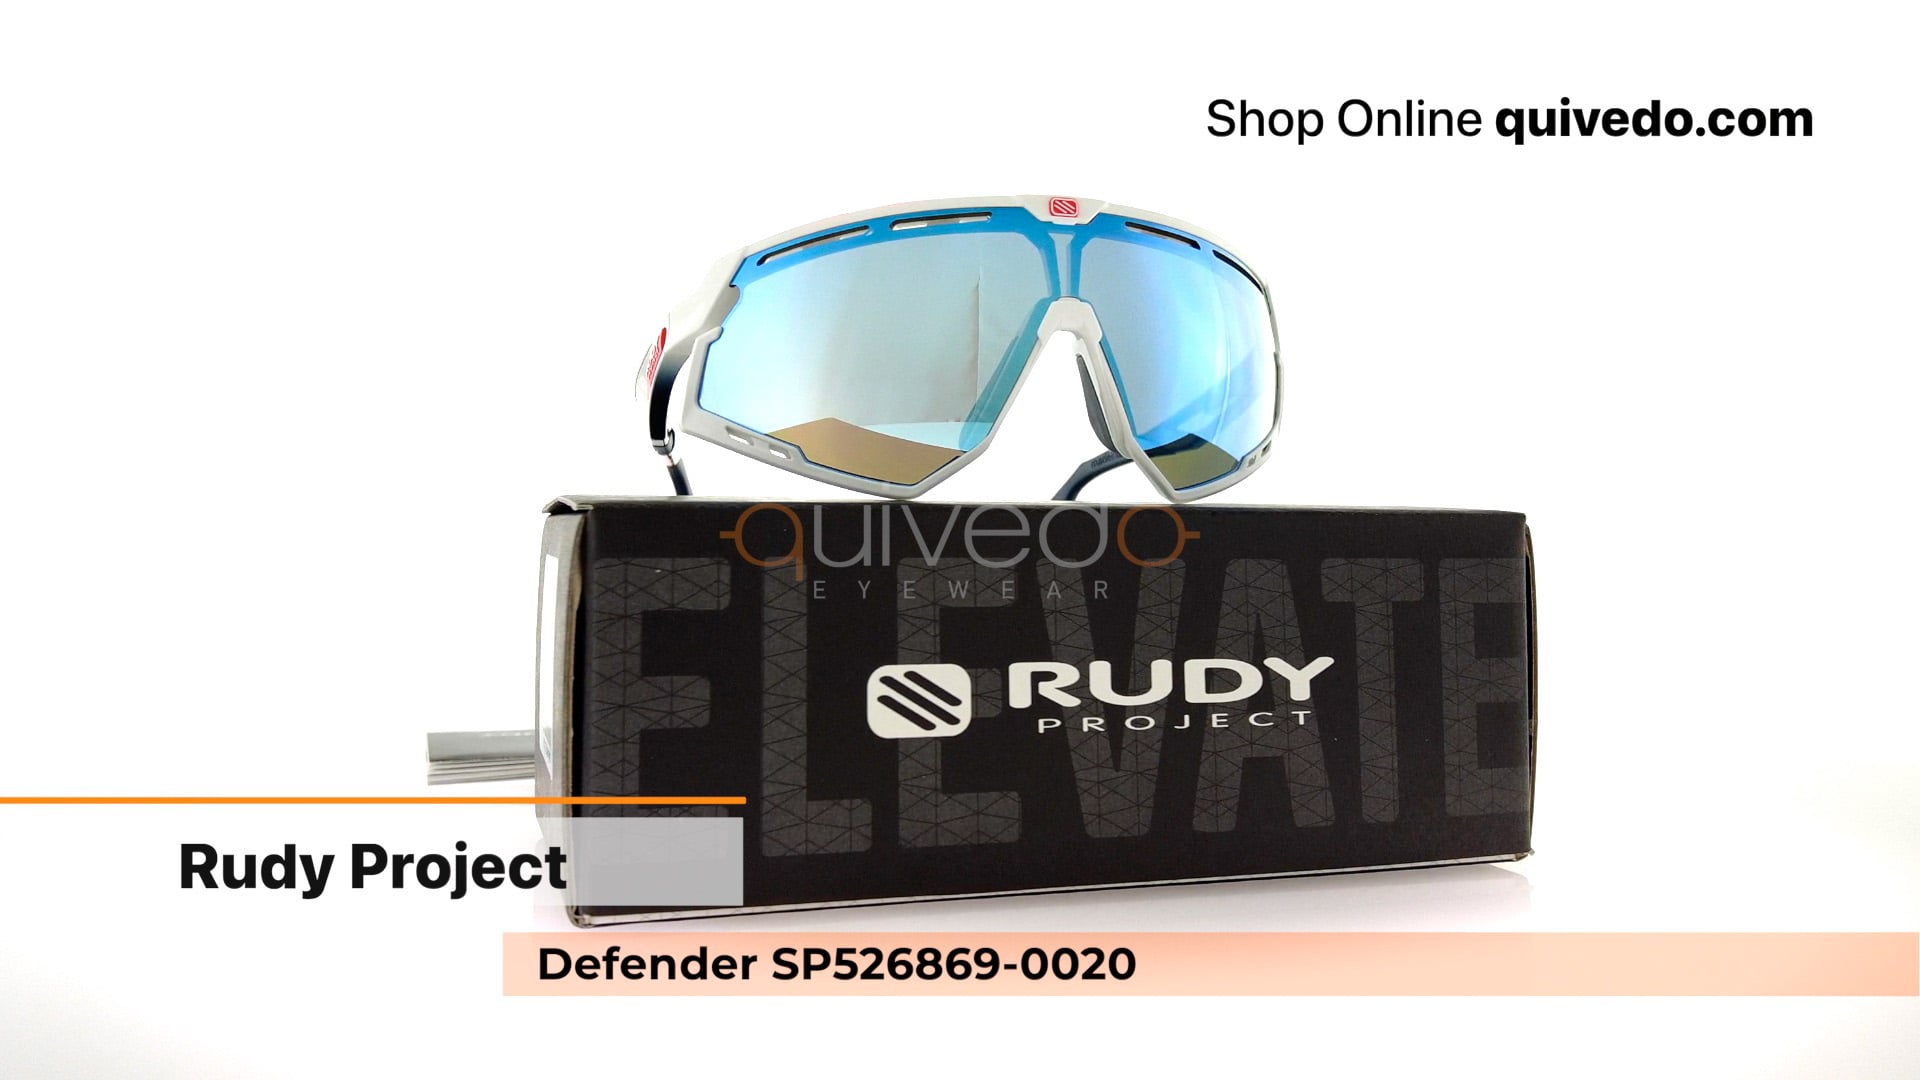 Rudy Project Defender SP526869-0020